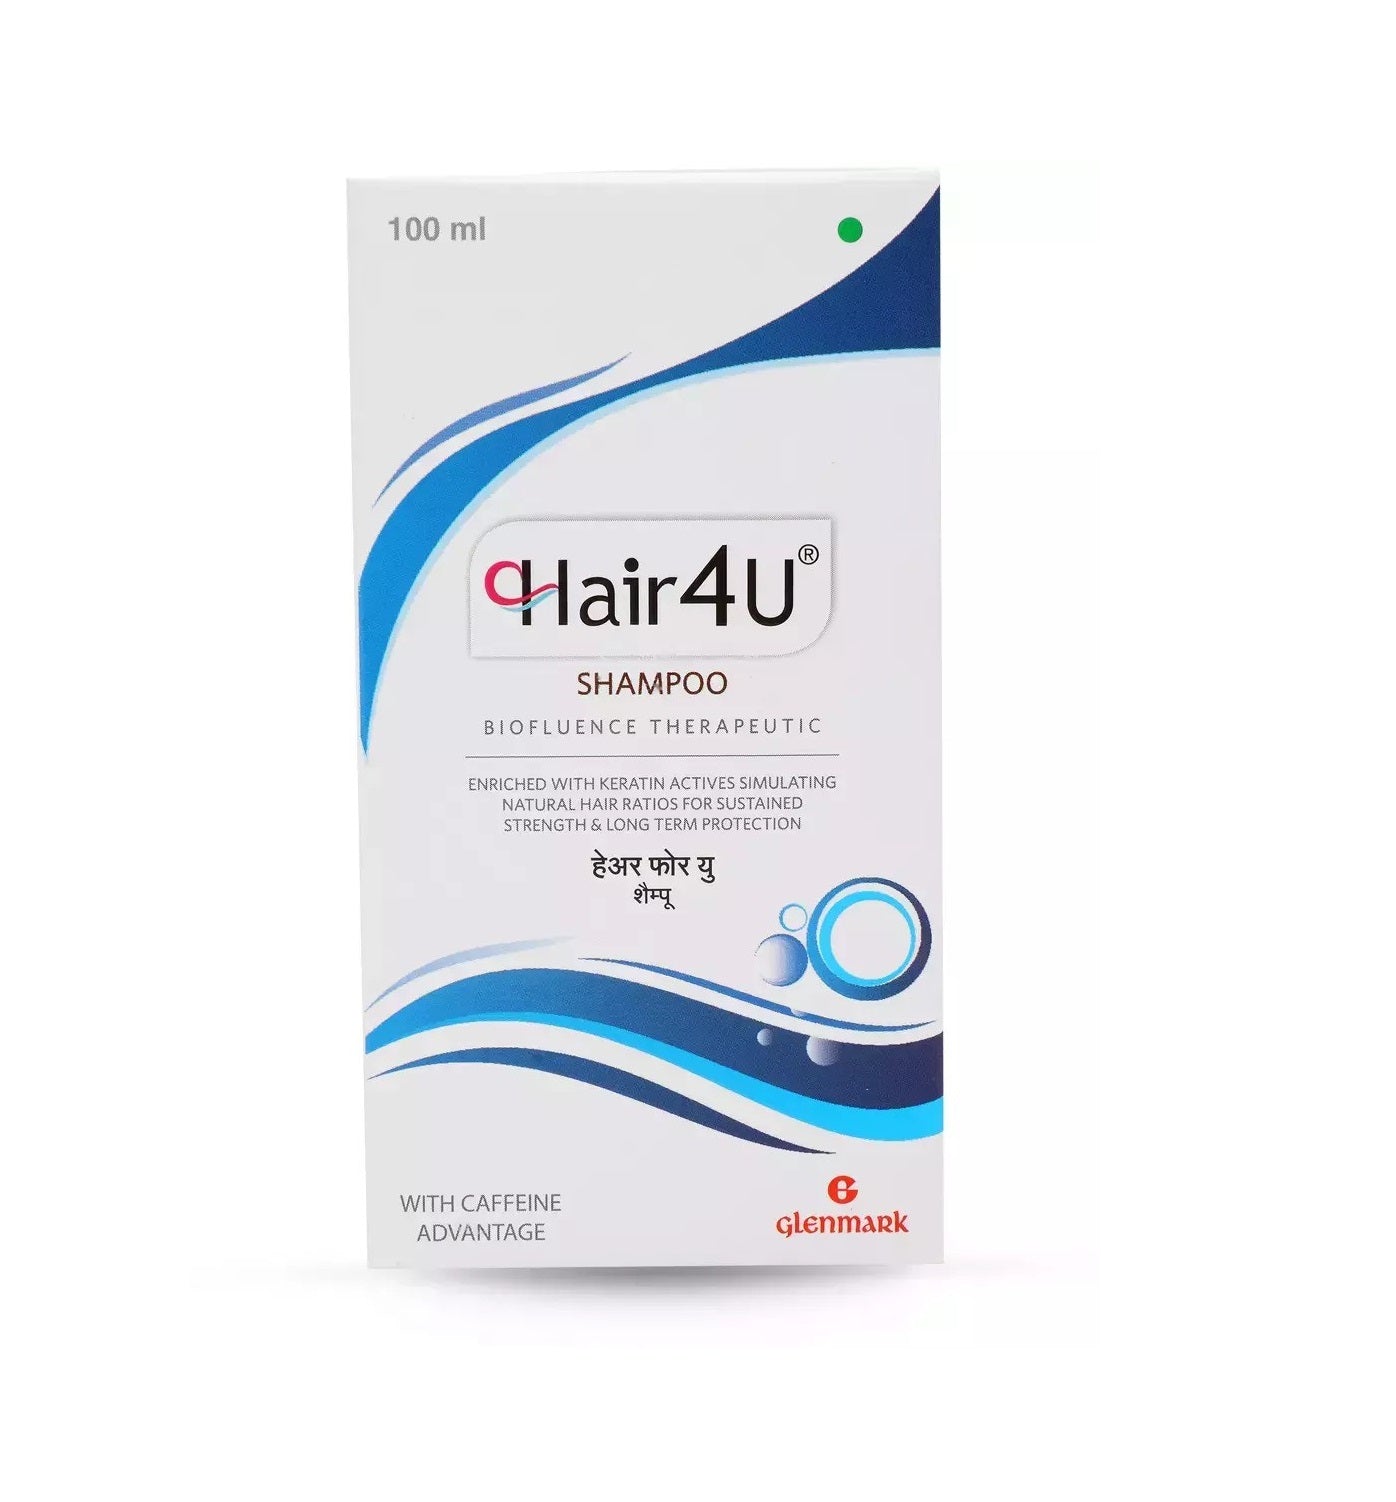 Hair 4U Shampoo (100ml)